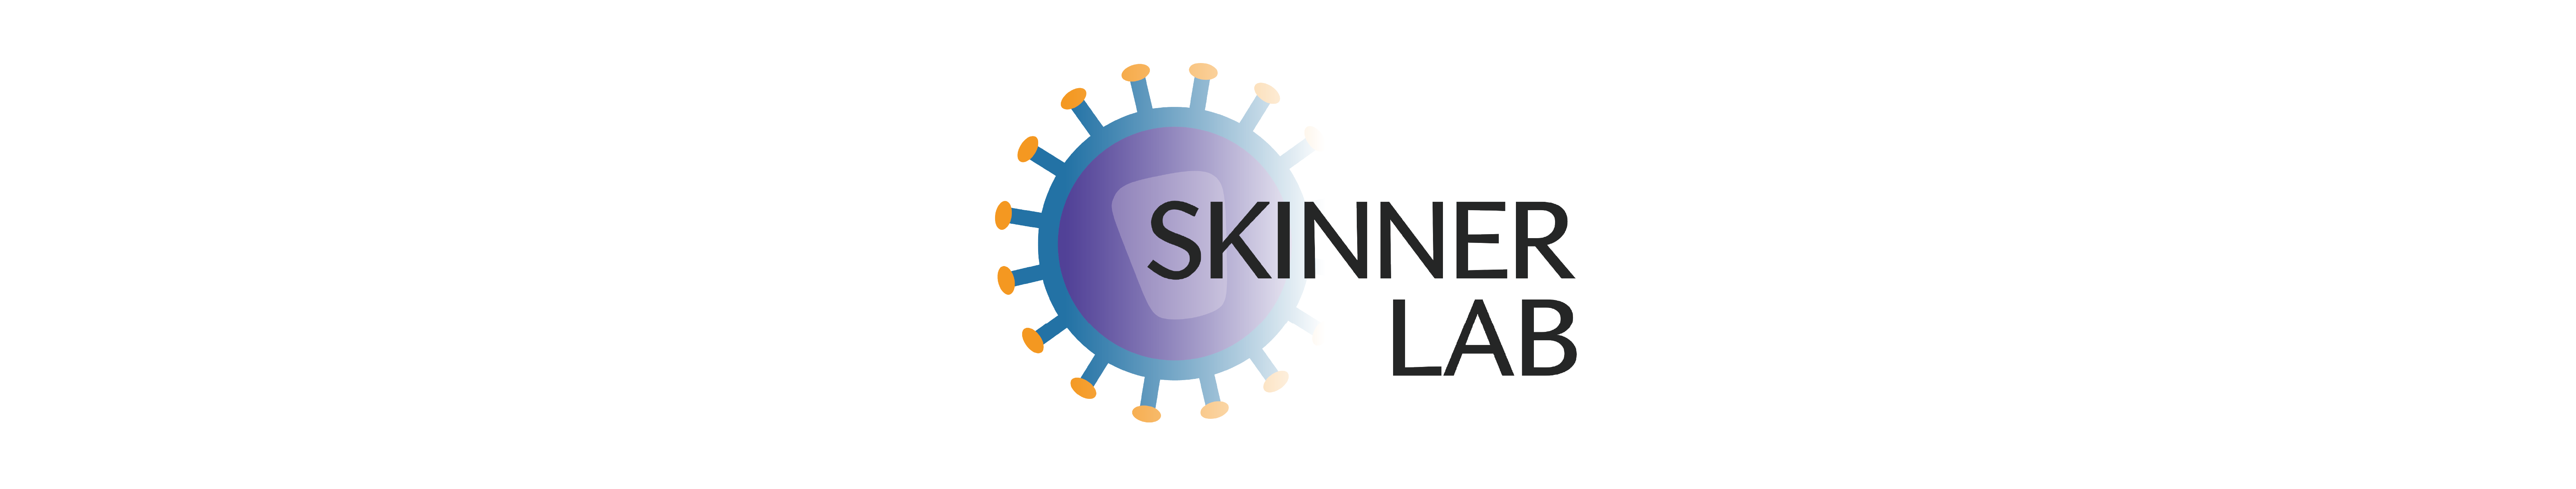 Skinner Lab Logo Small